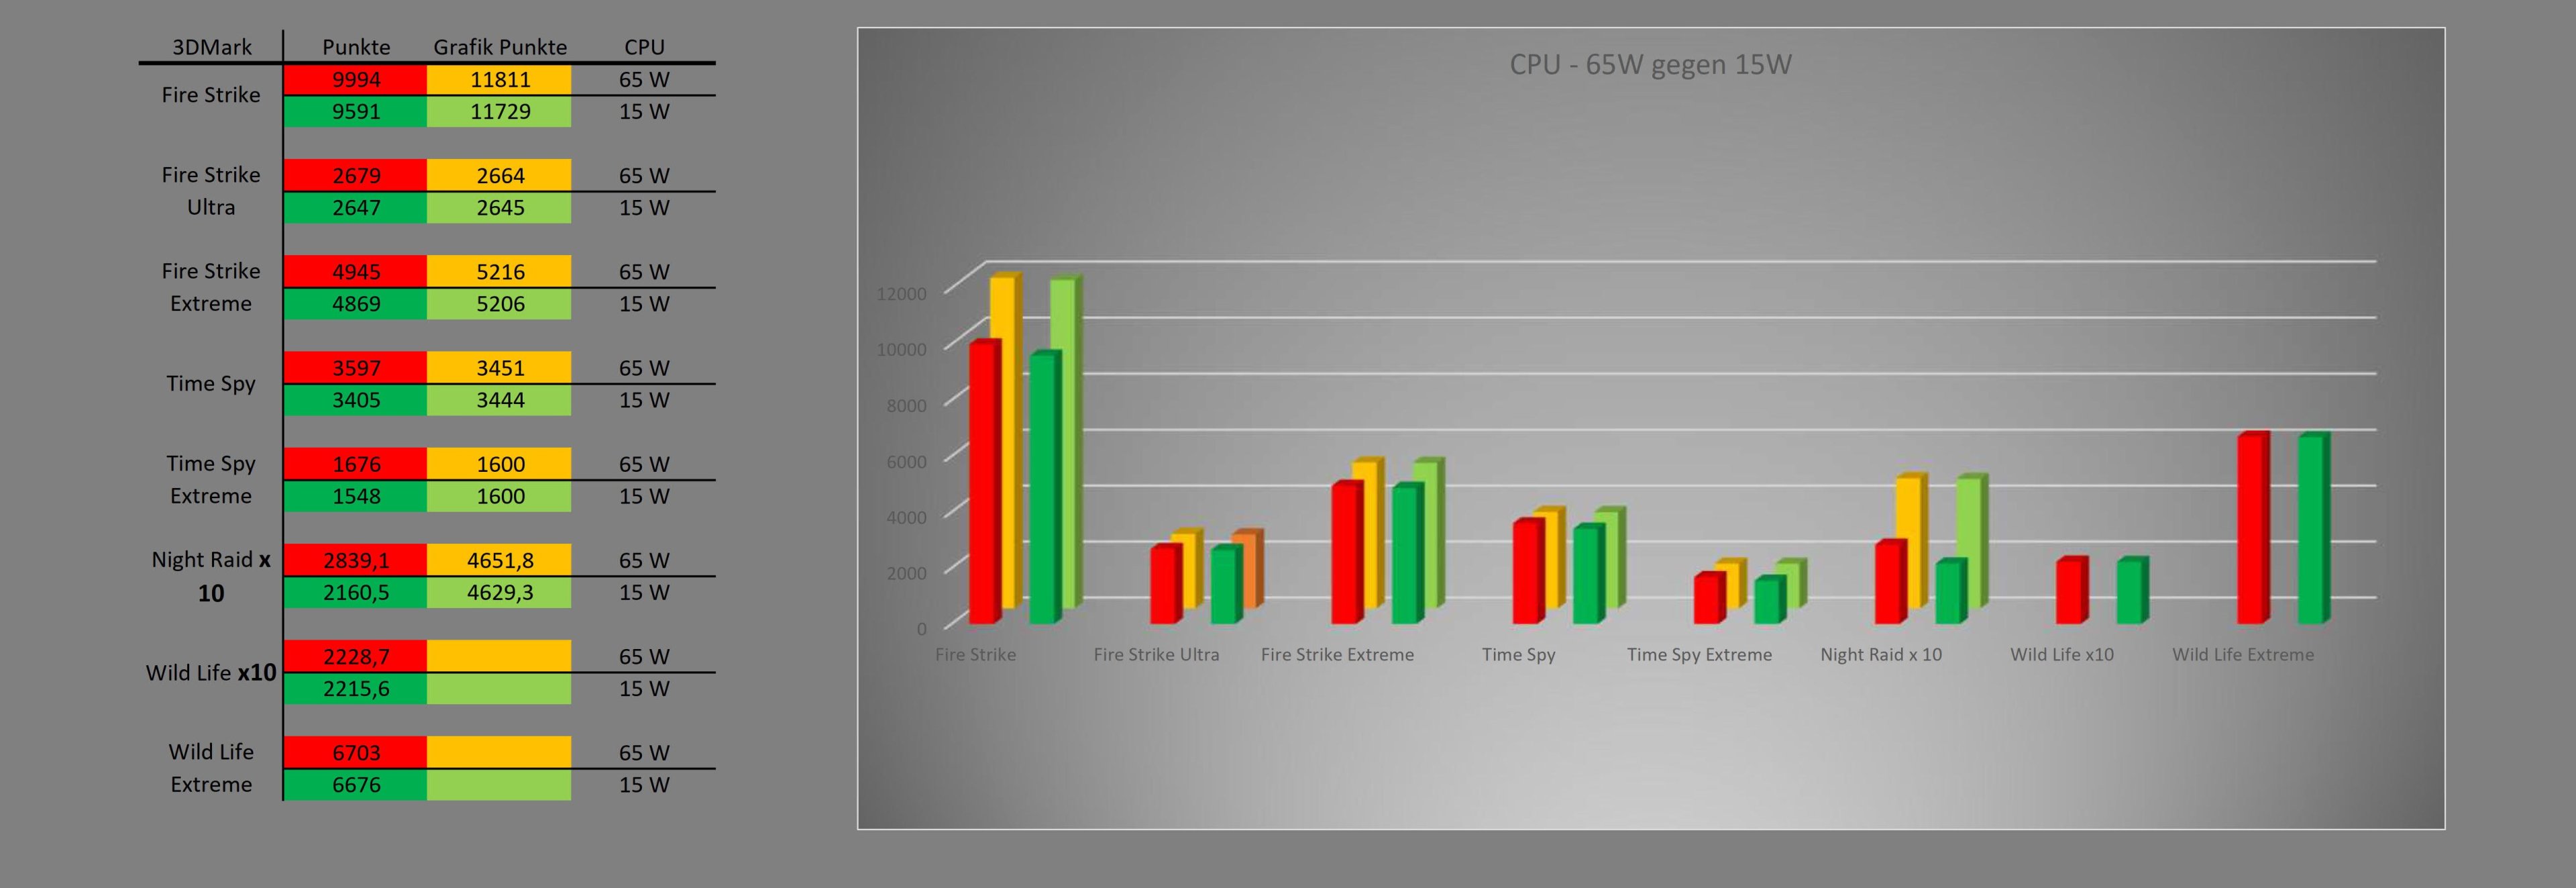 RX 65W gegen 15W CPU_1.jpg